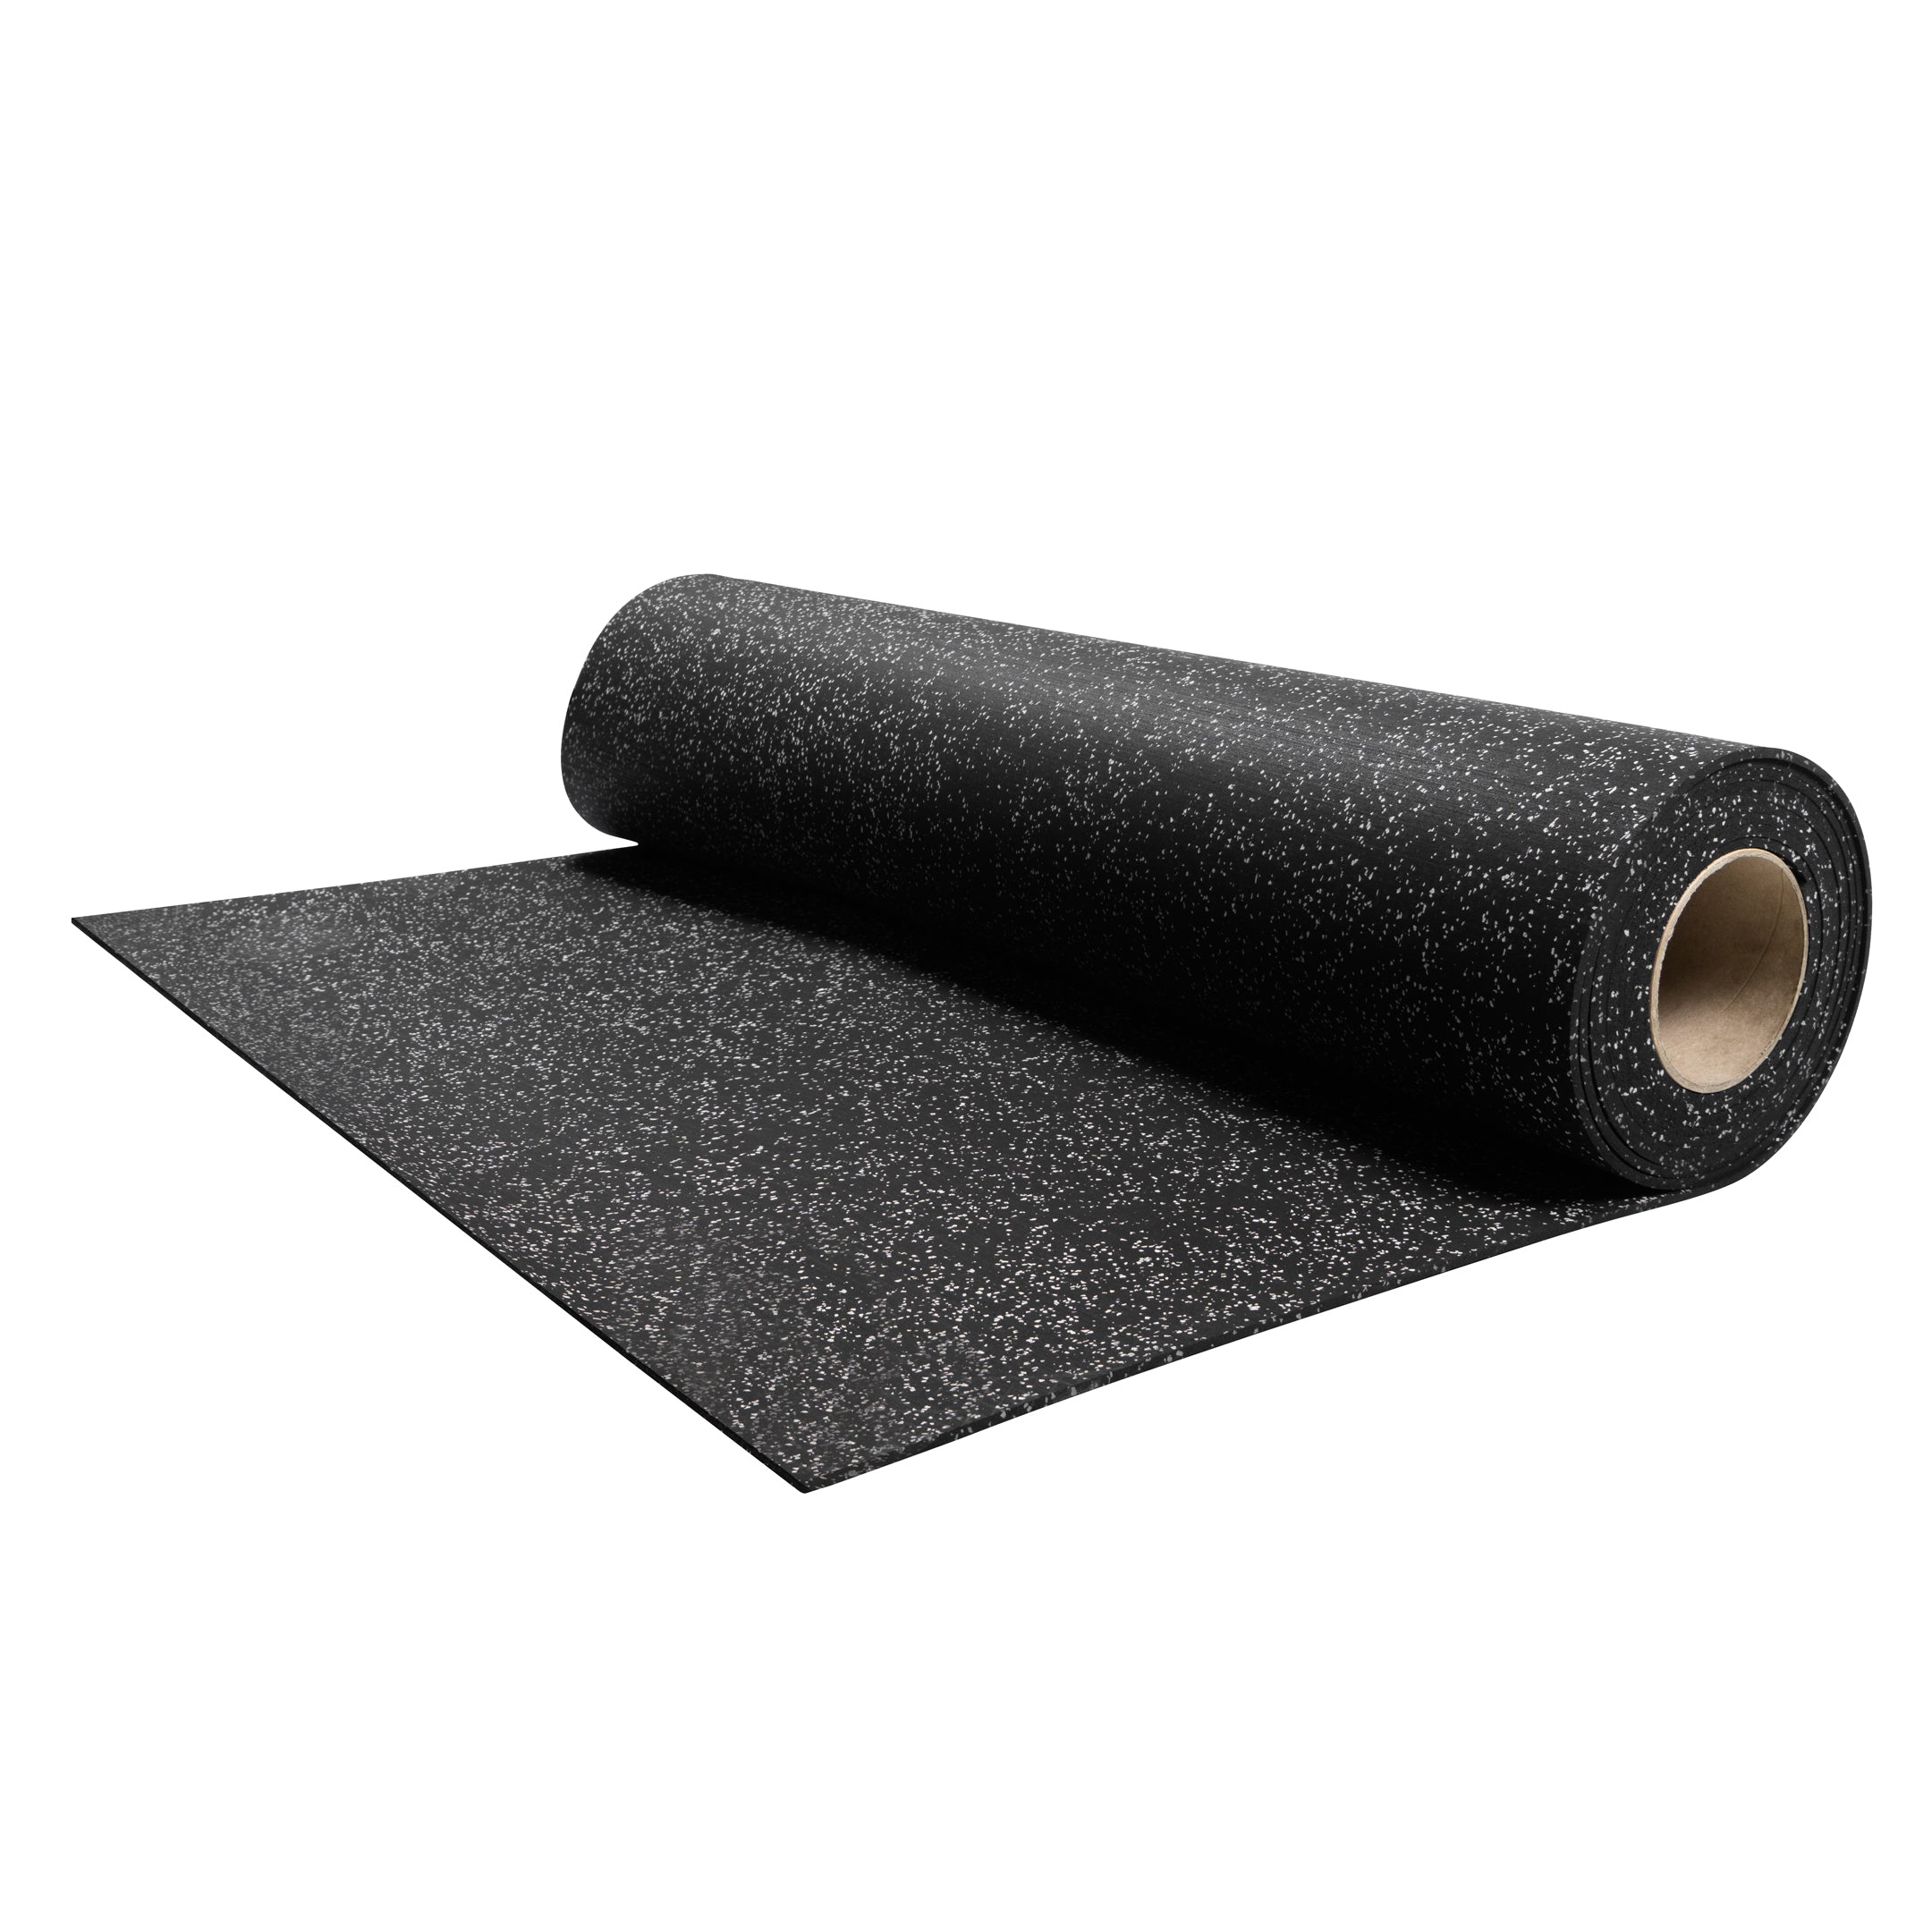 Jazz® 6mm Rubber Flooring Roll - Black/Grey - 6M Length (6.6M2) - Sumo  Strength